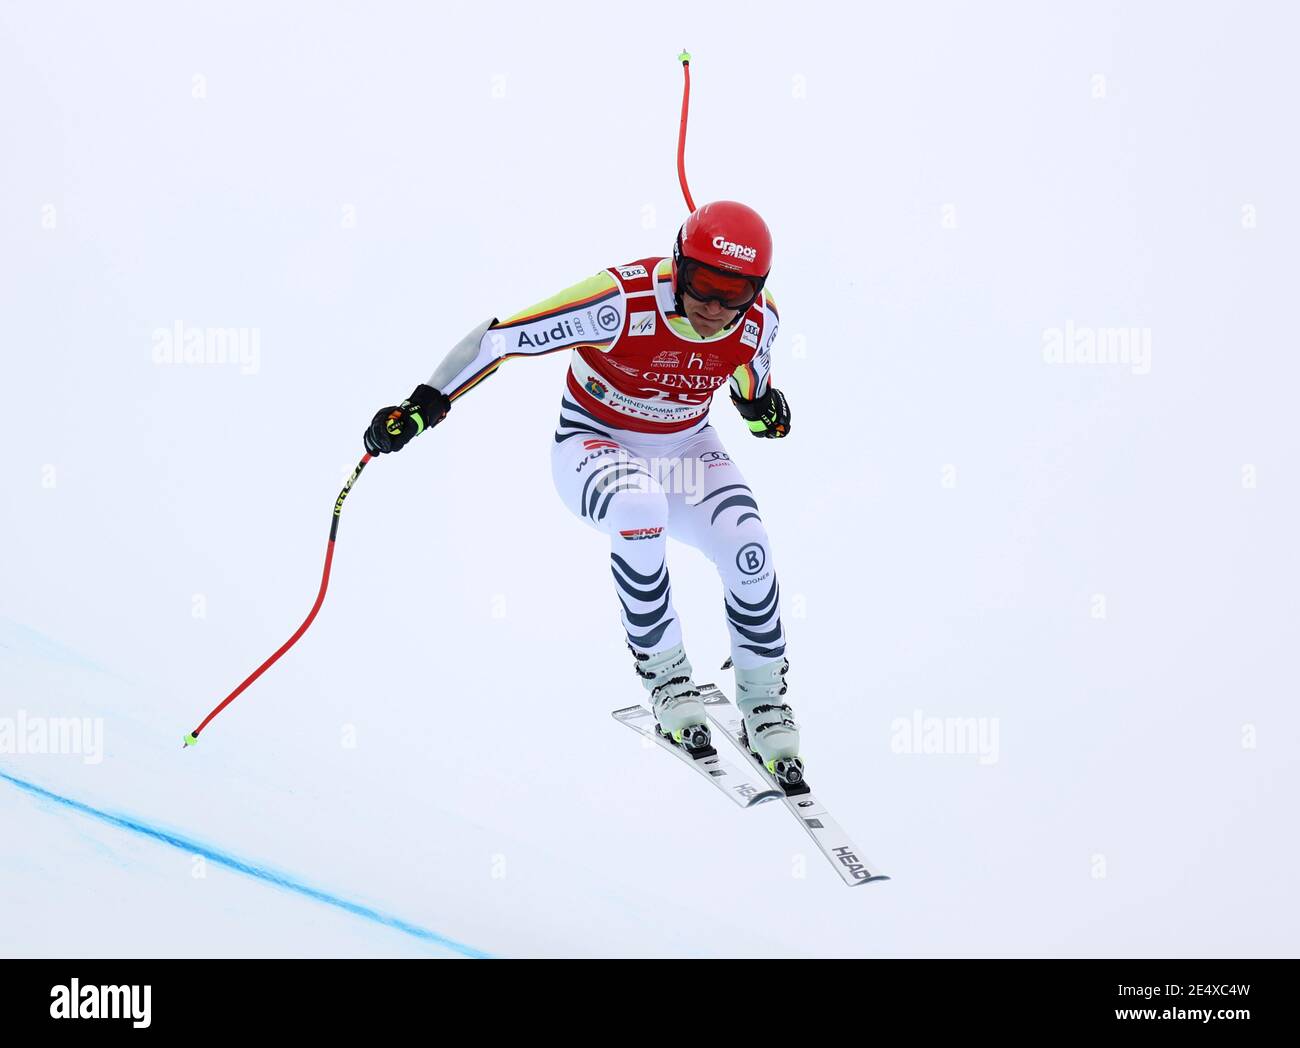 Ski Alpin - Herren Super-G - Kitzbühel, Österreich - 25. Januar 2021 Josef  Ferstl in Aktion REUTERS/Lisi Niesner Stockfotografie - Alamy